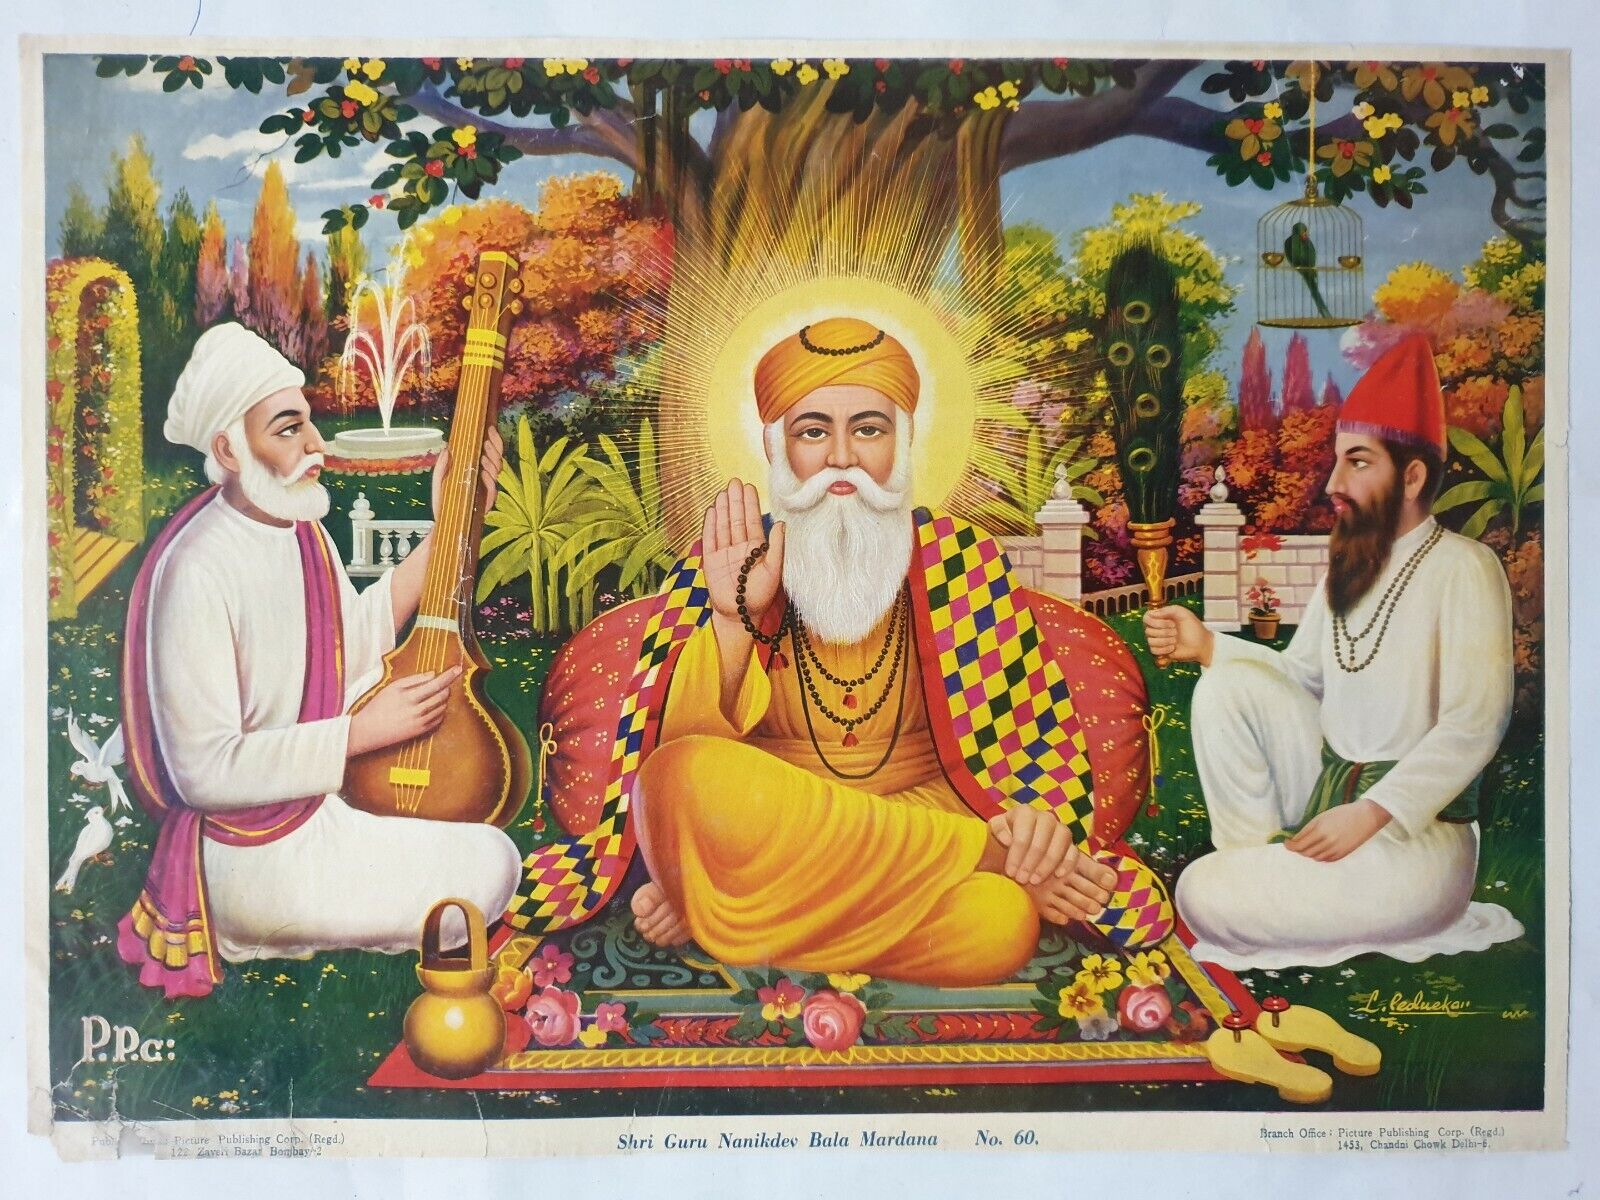 India Vintage Sikh Print SHRI GURU NANAKDEV BALA MARDANA by Peduekar 19in x14in 